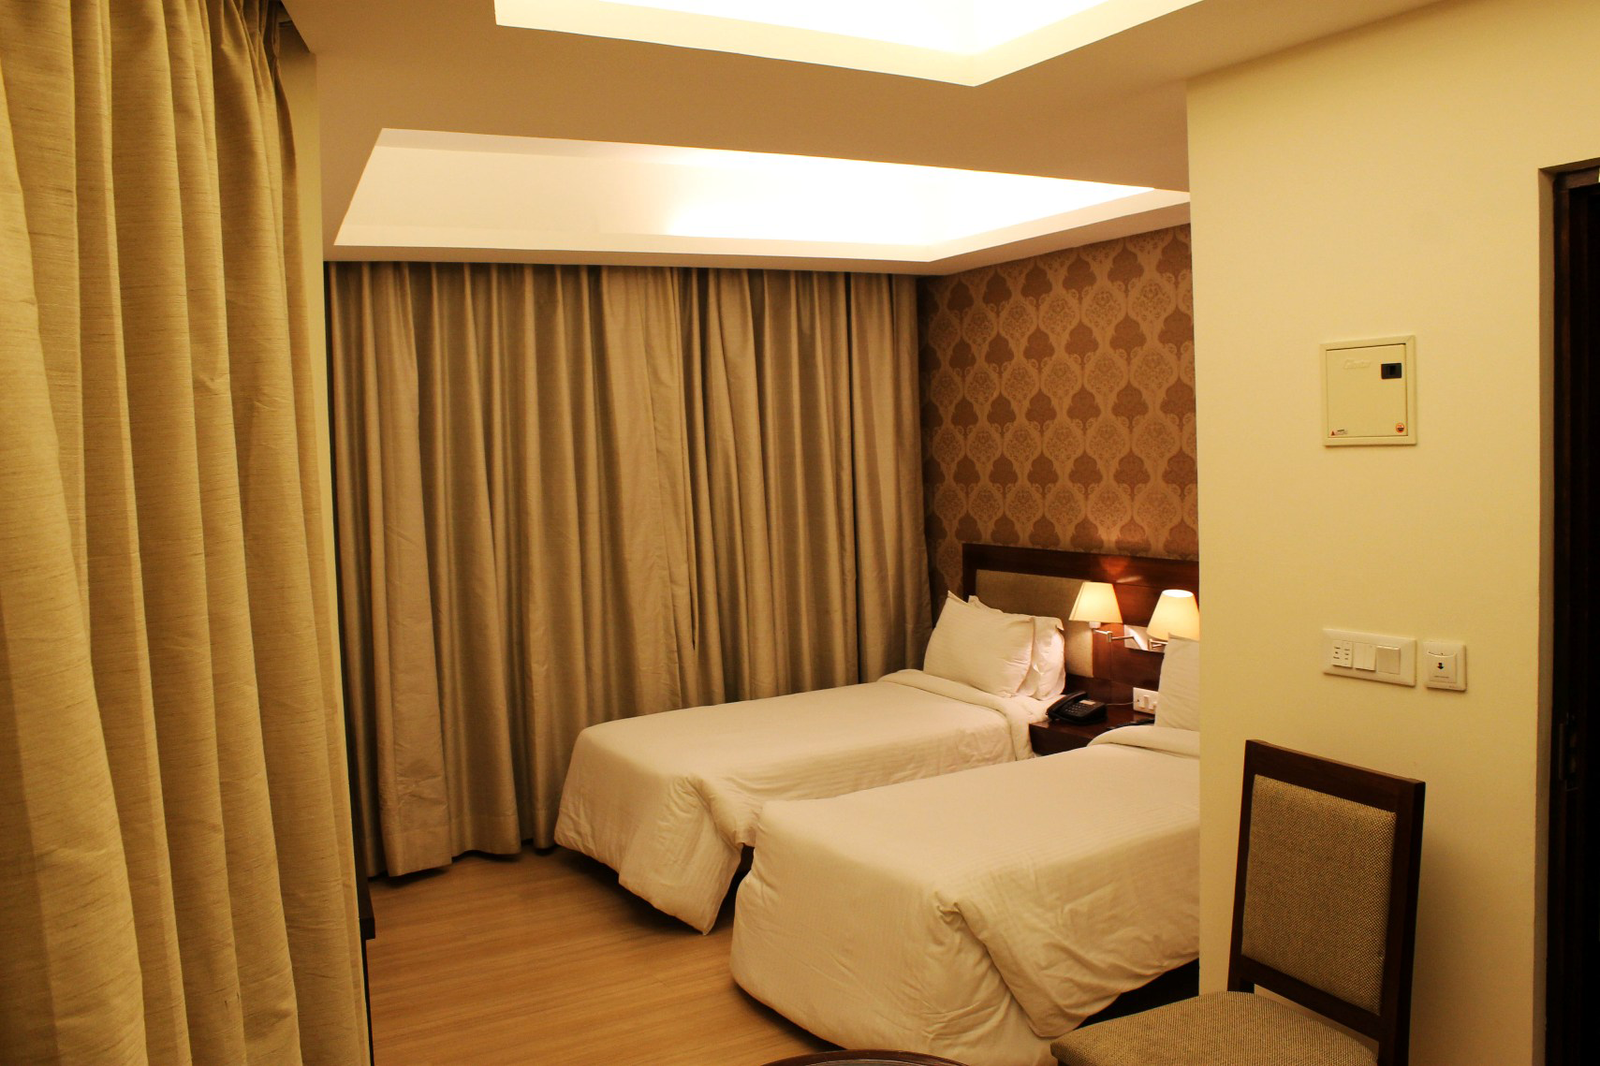 Double bed Hotel Room in dehradun